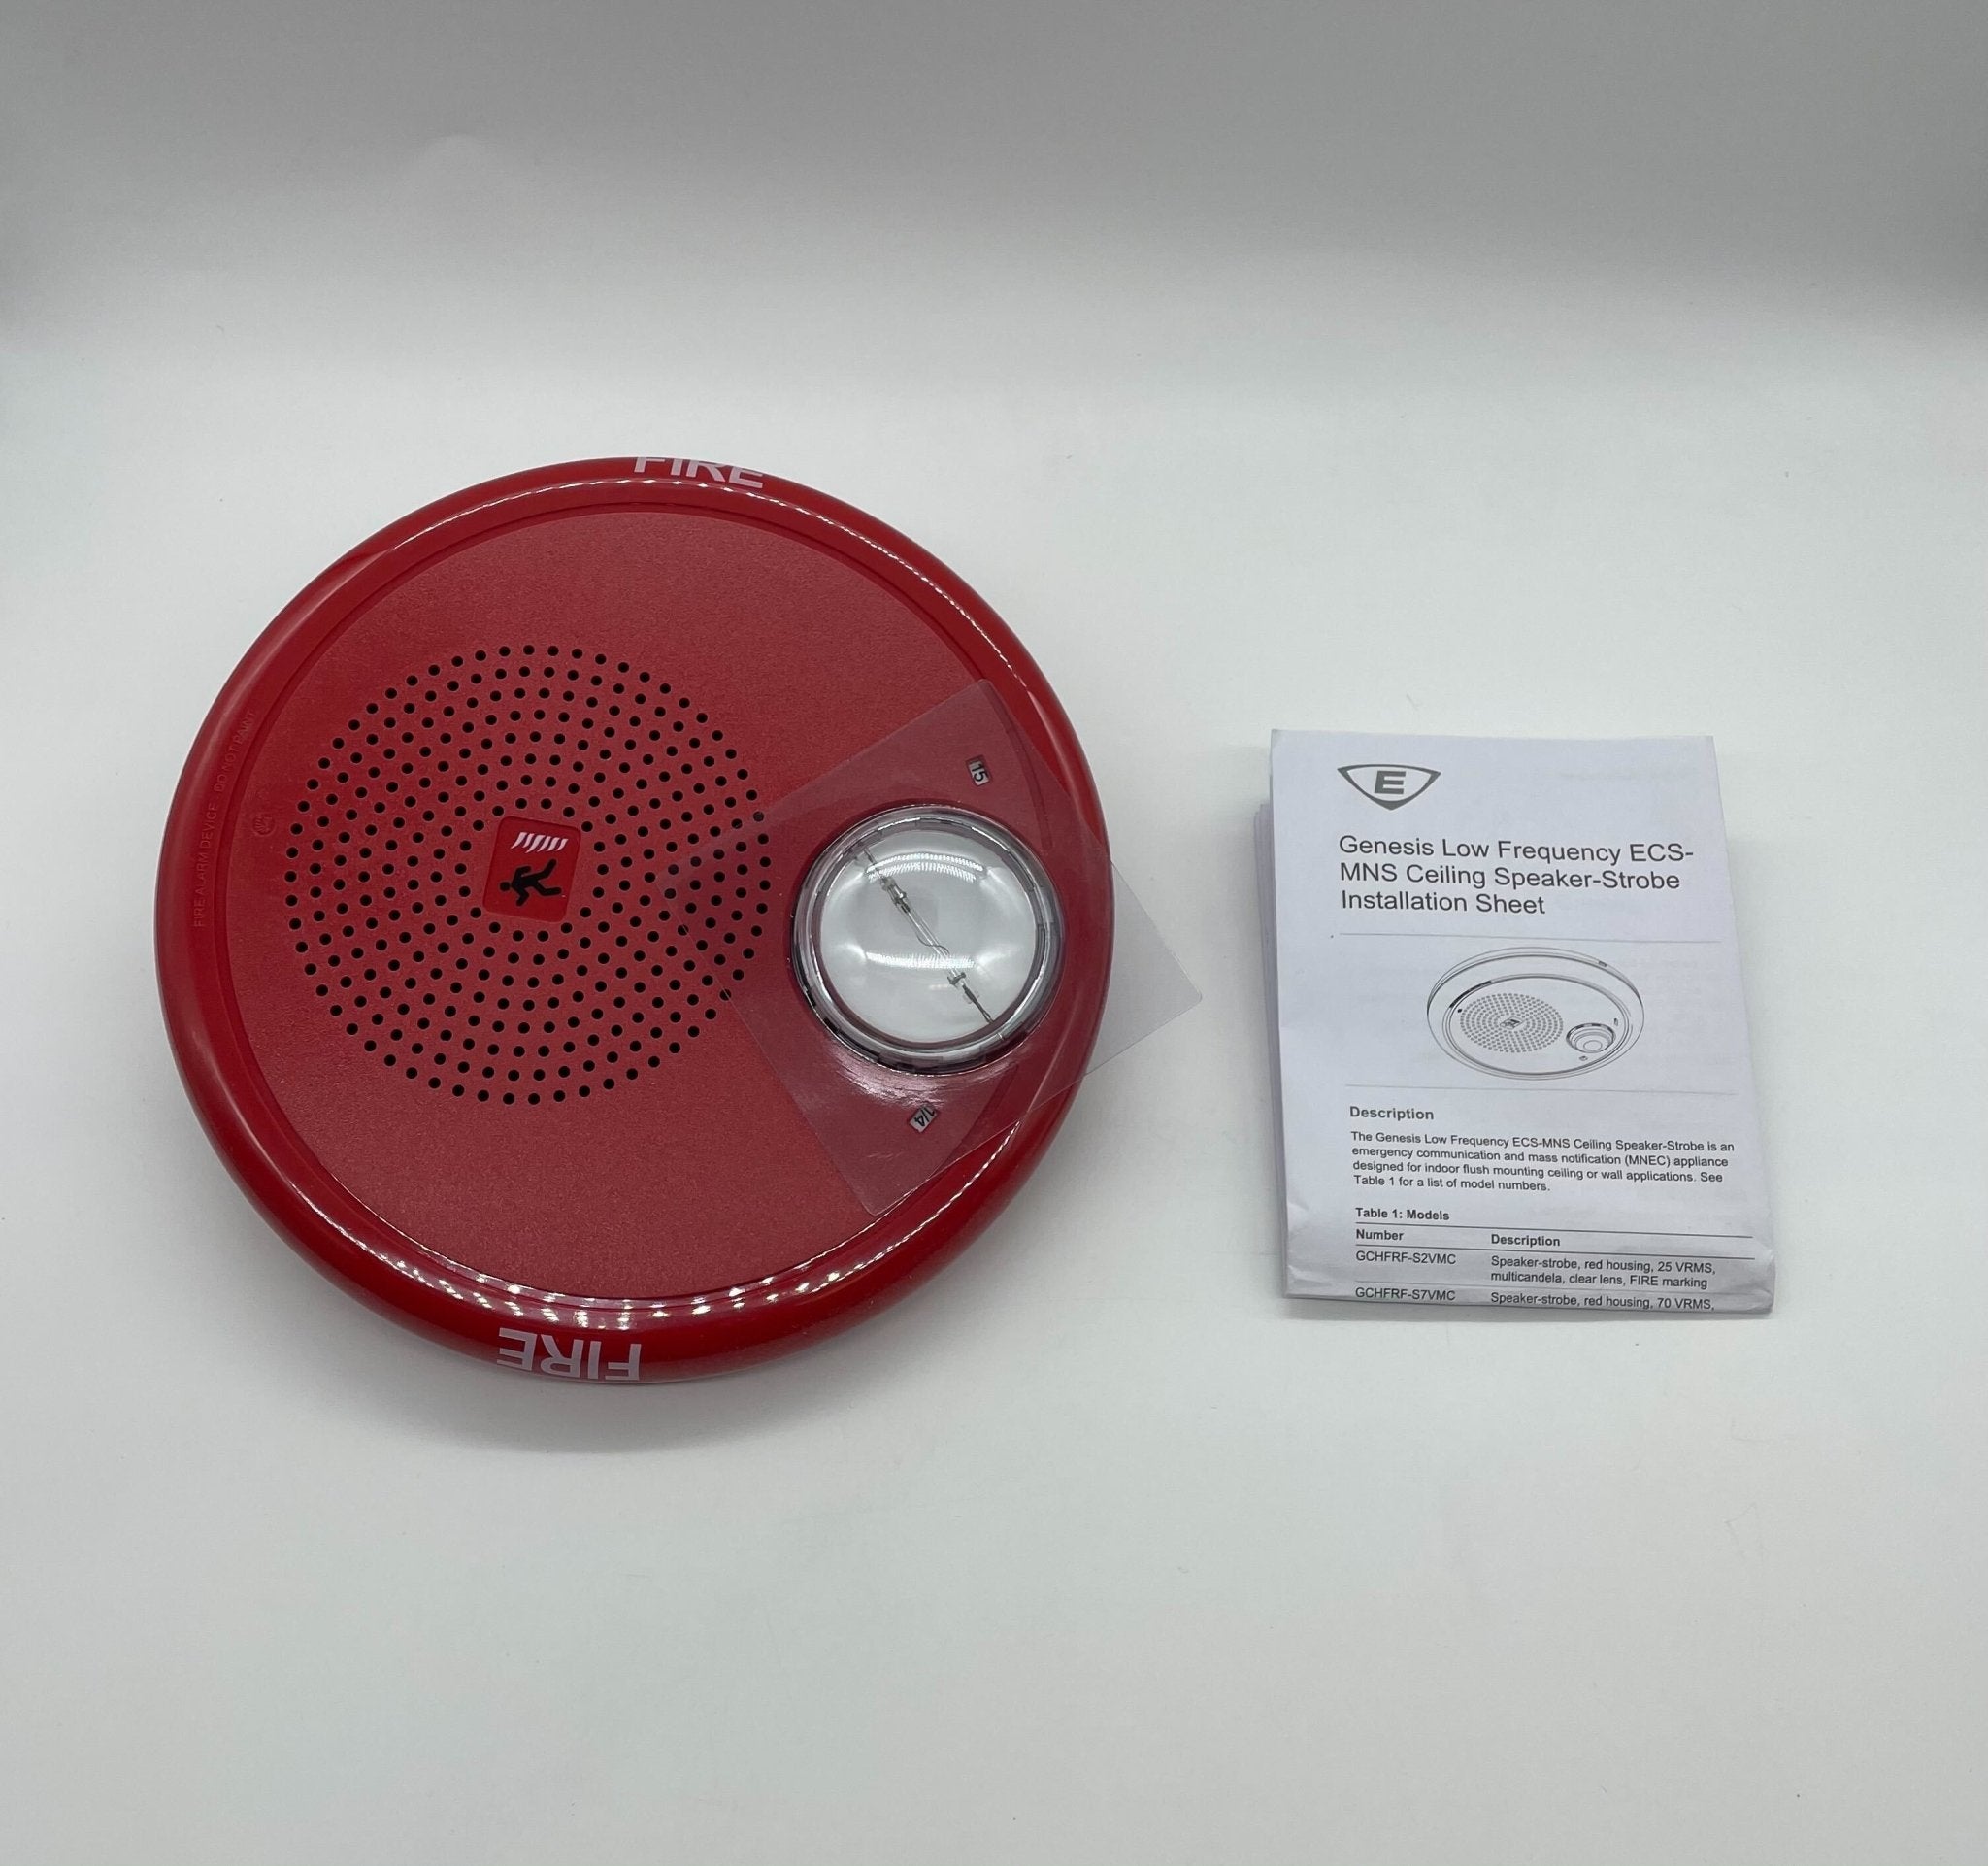 Edwards GCHFRF-S7VMC - The Fire Alarm Supplier